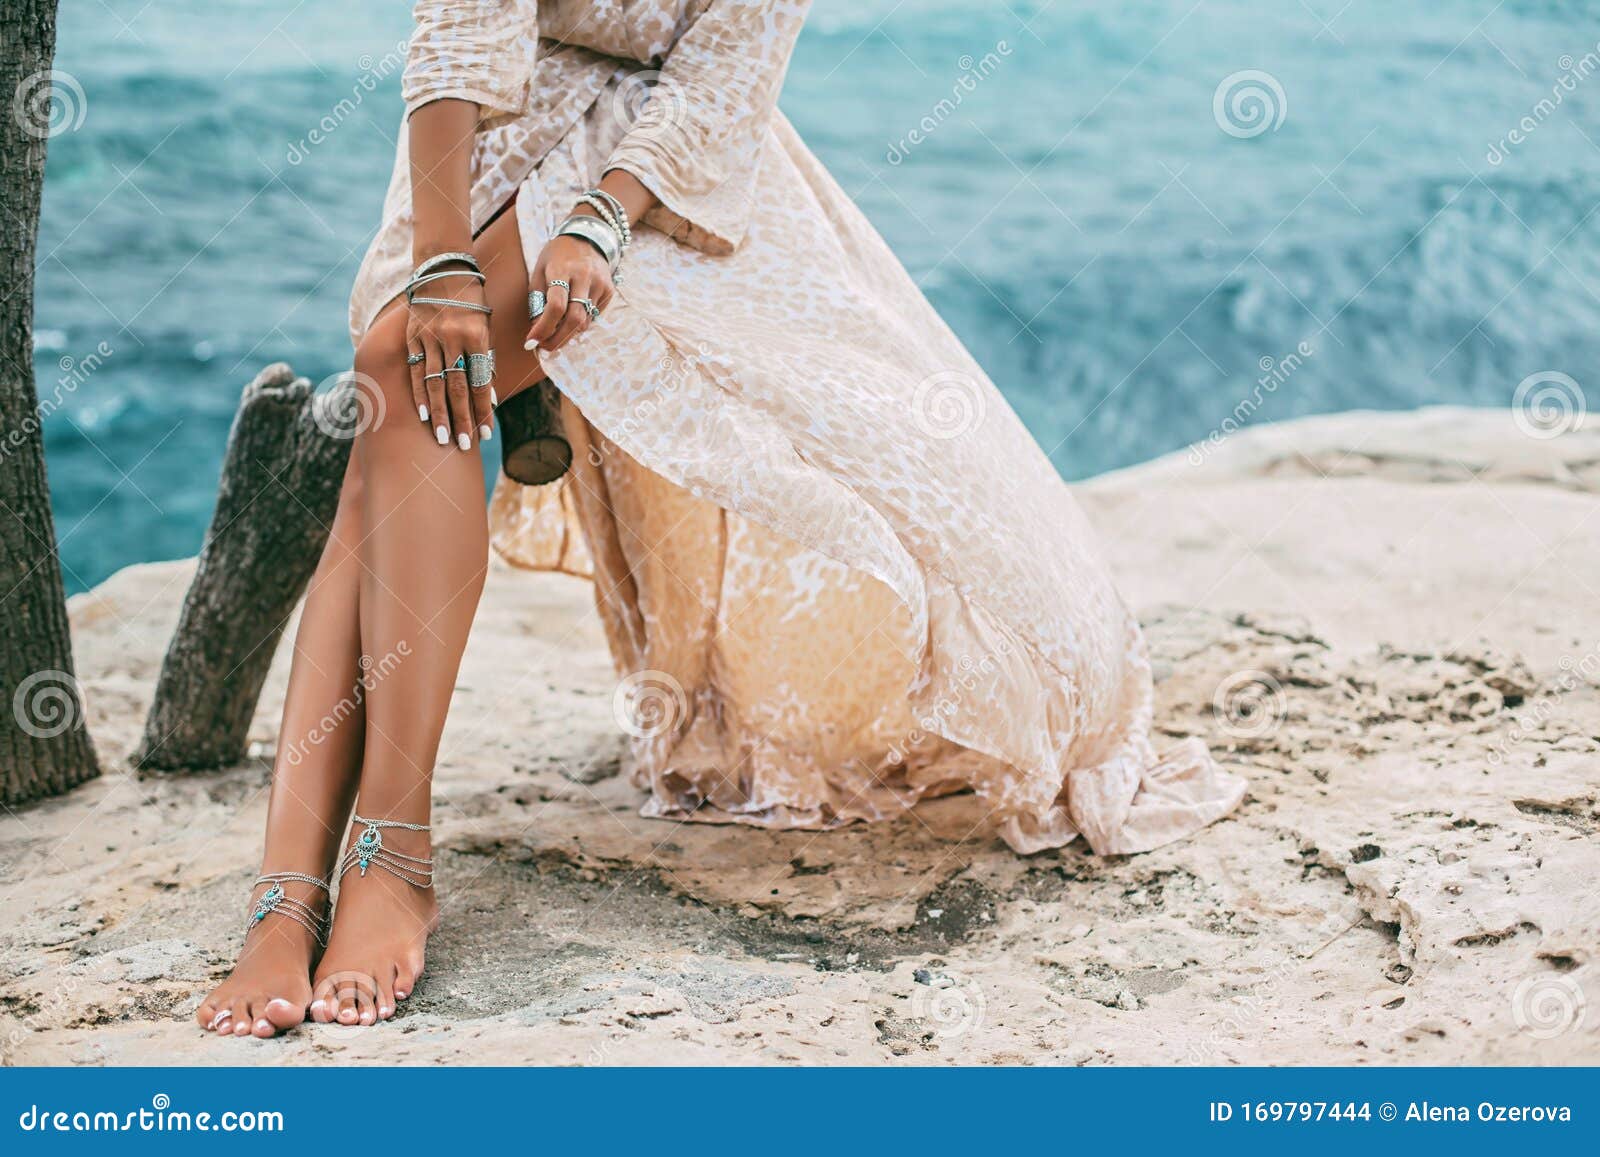 boho girl wearing indian silver jewelry on the beach